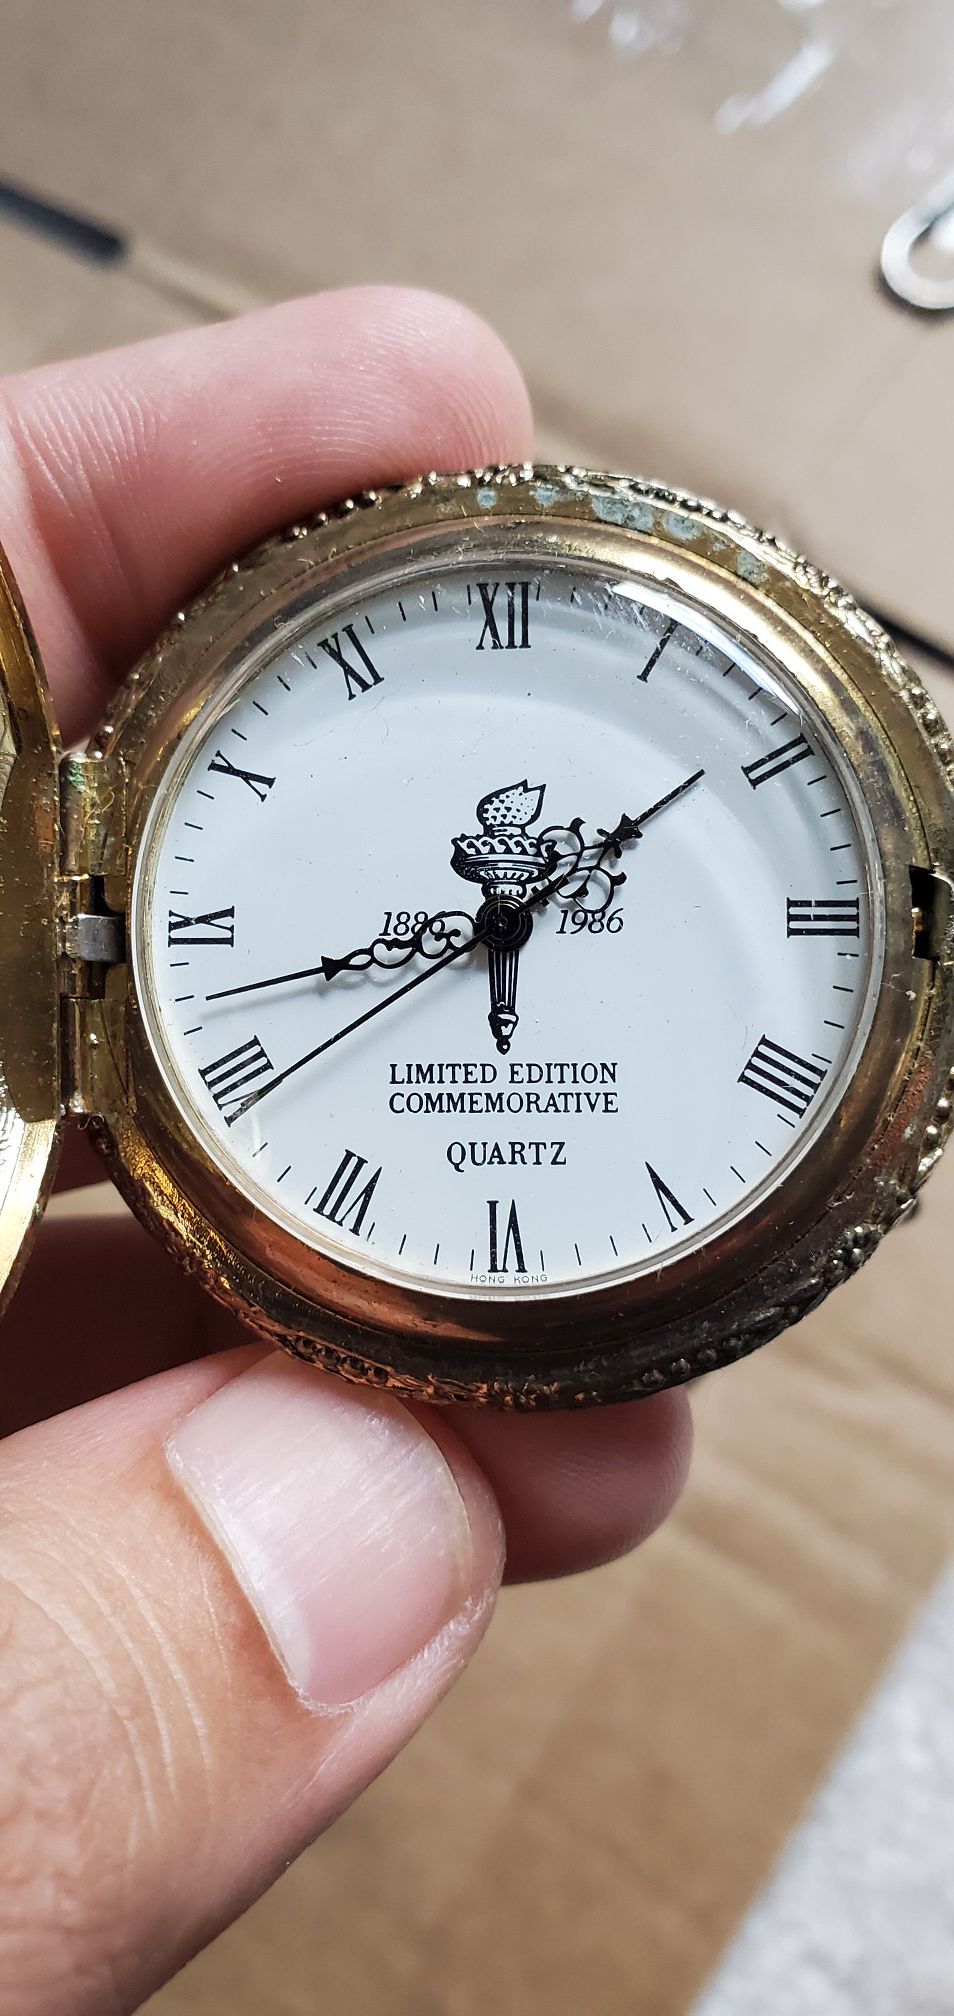 STATUE OF LIBERTY 1886-1986 Limited Edition Commemorative Quartz Pocket Watch